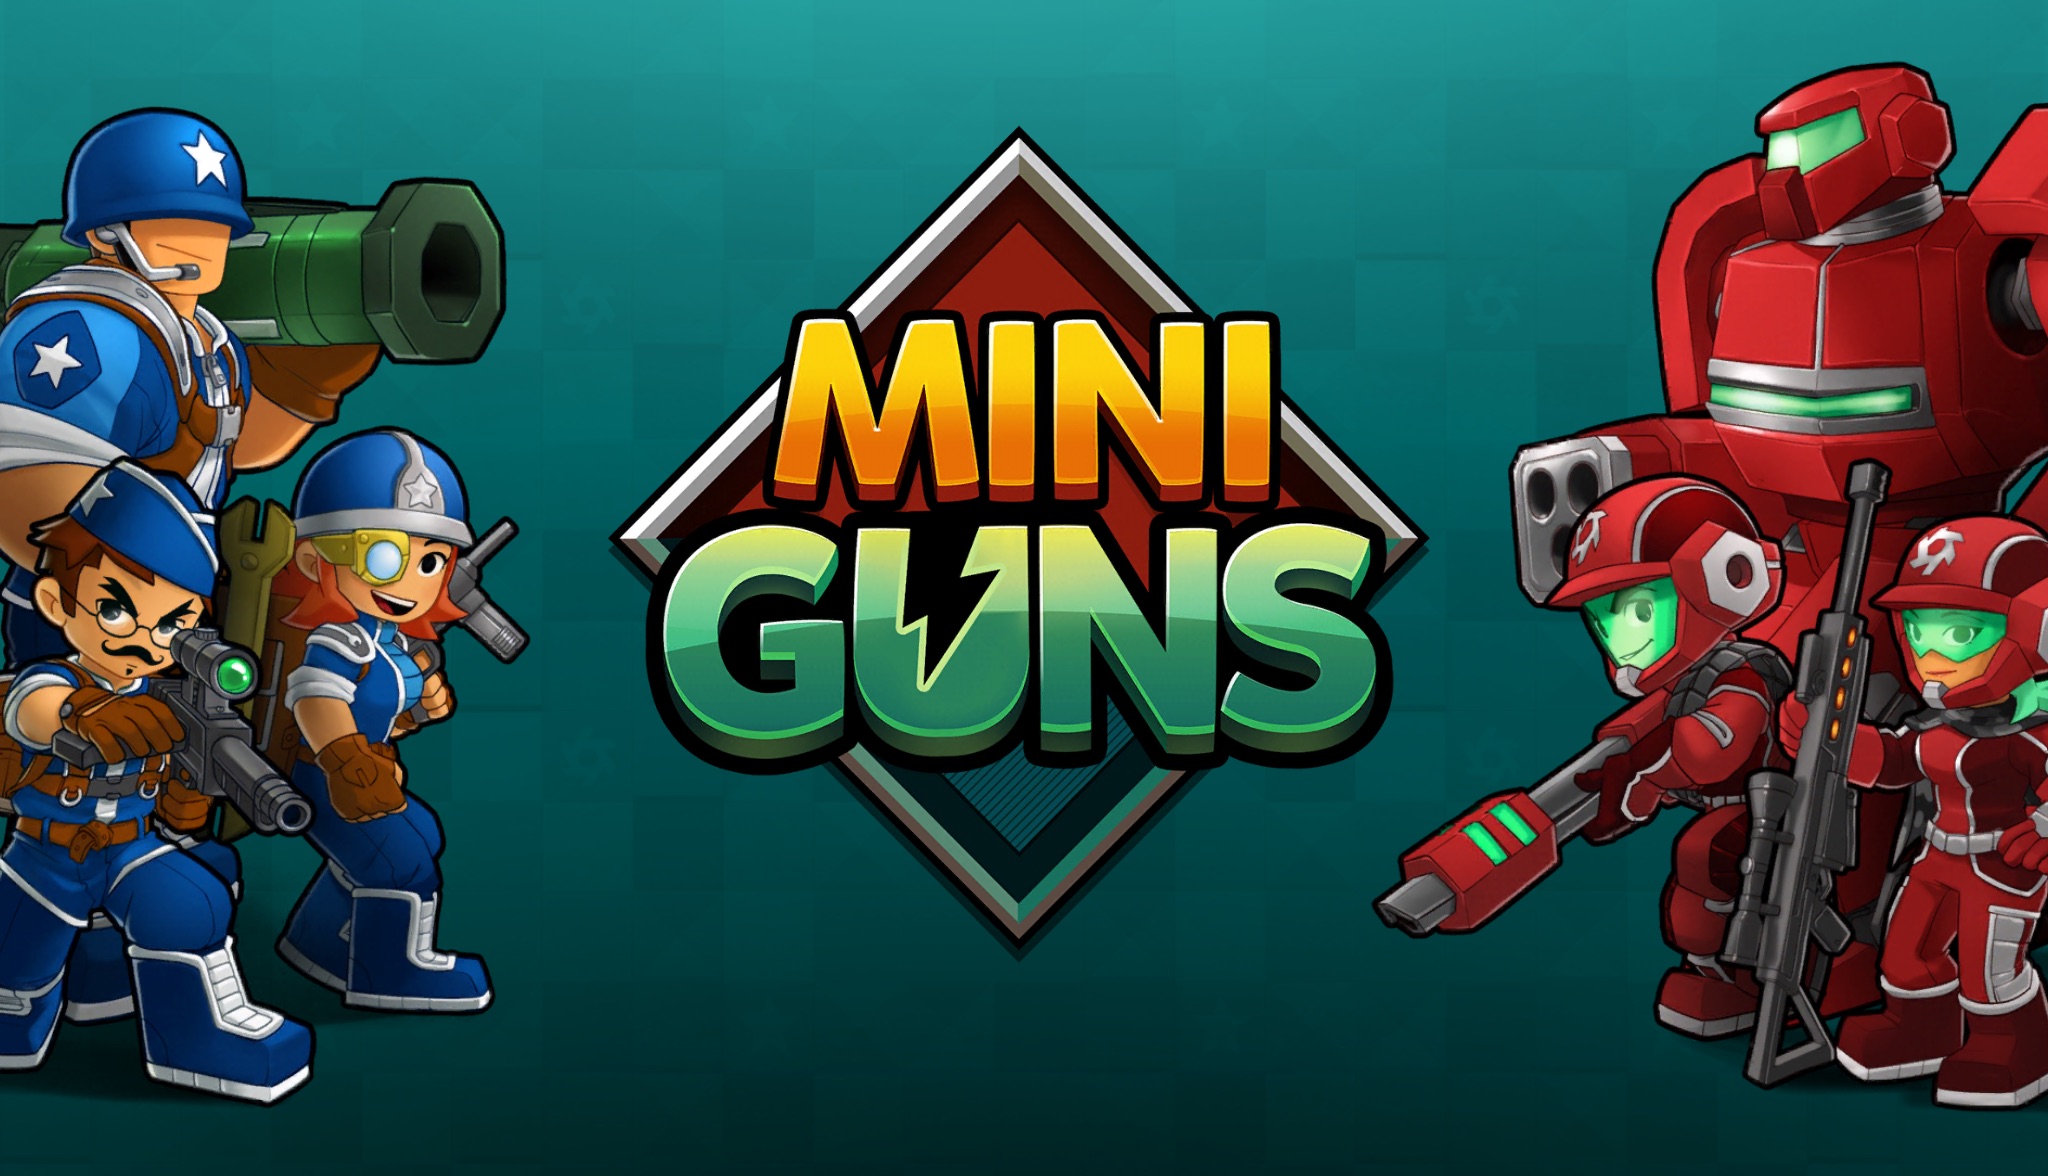 Mini Guns Review: Strategy is King